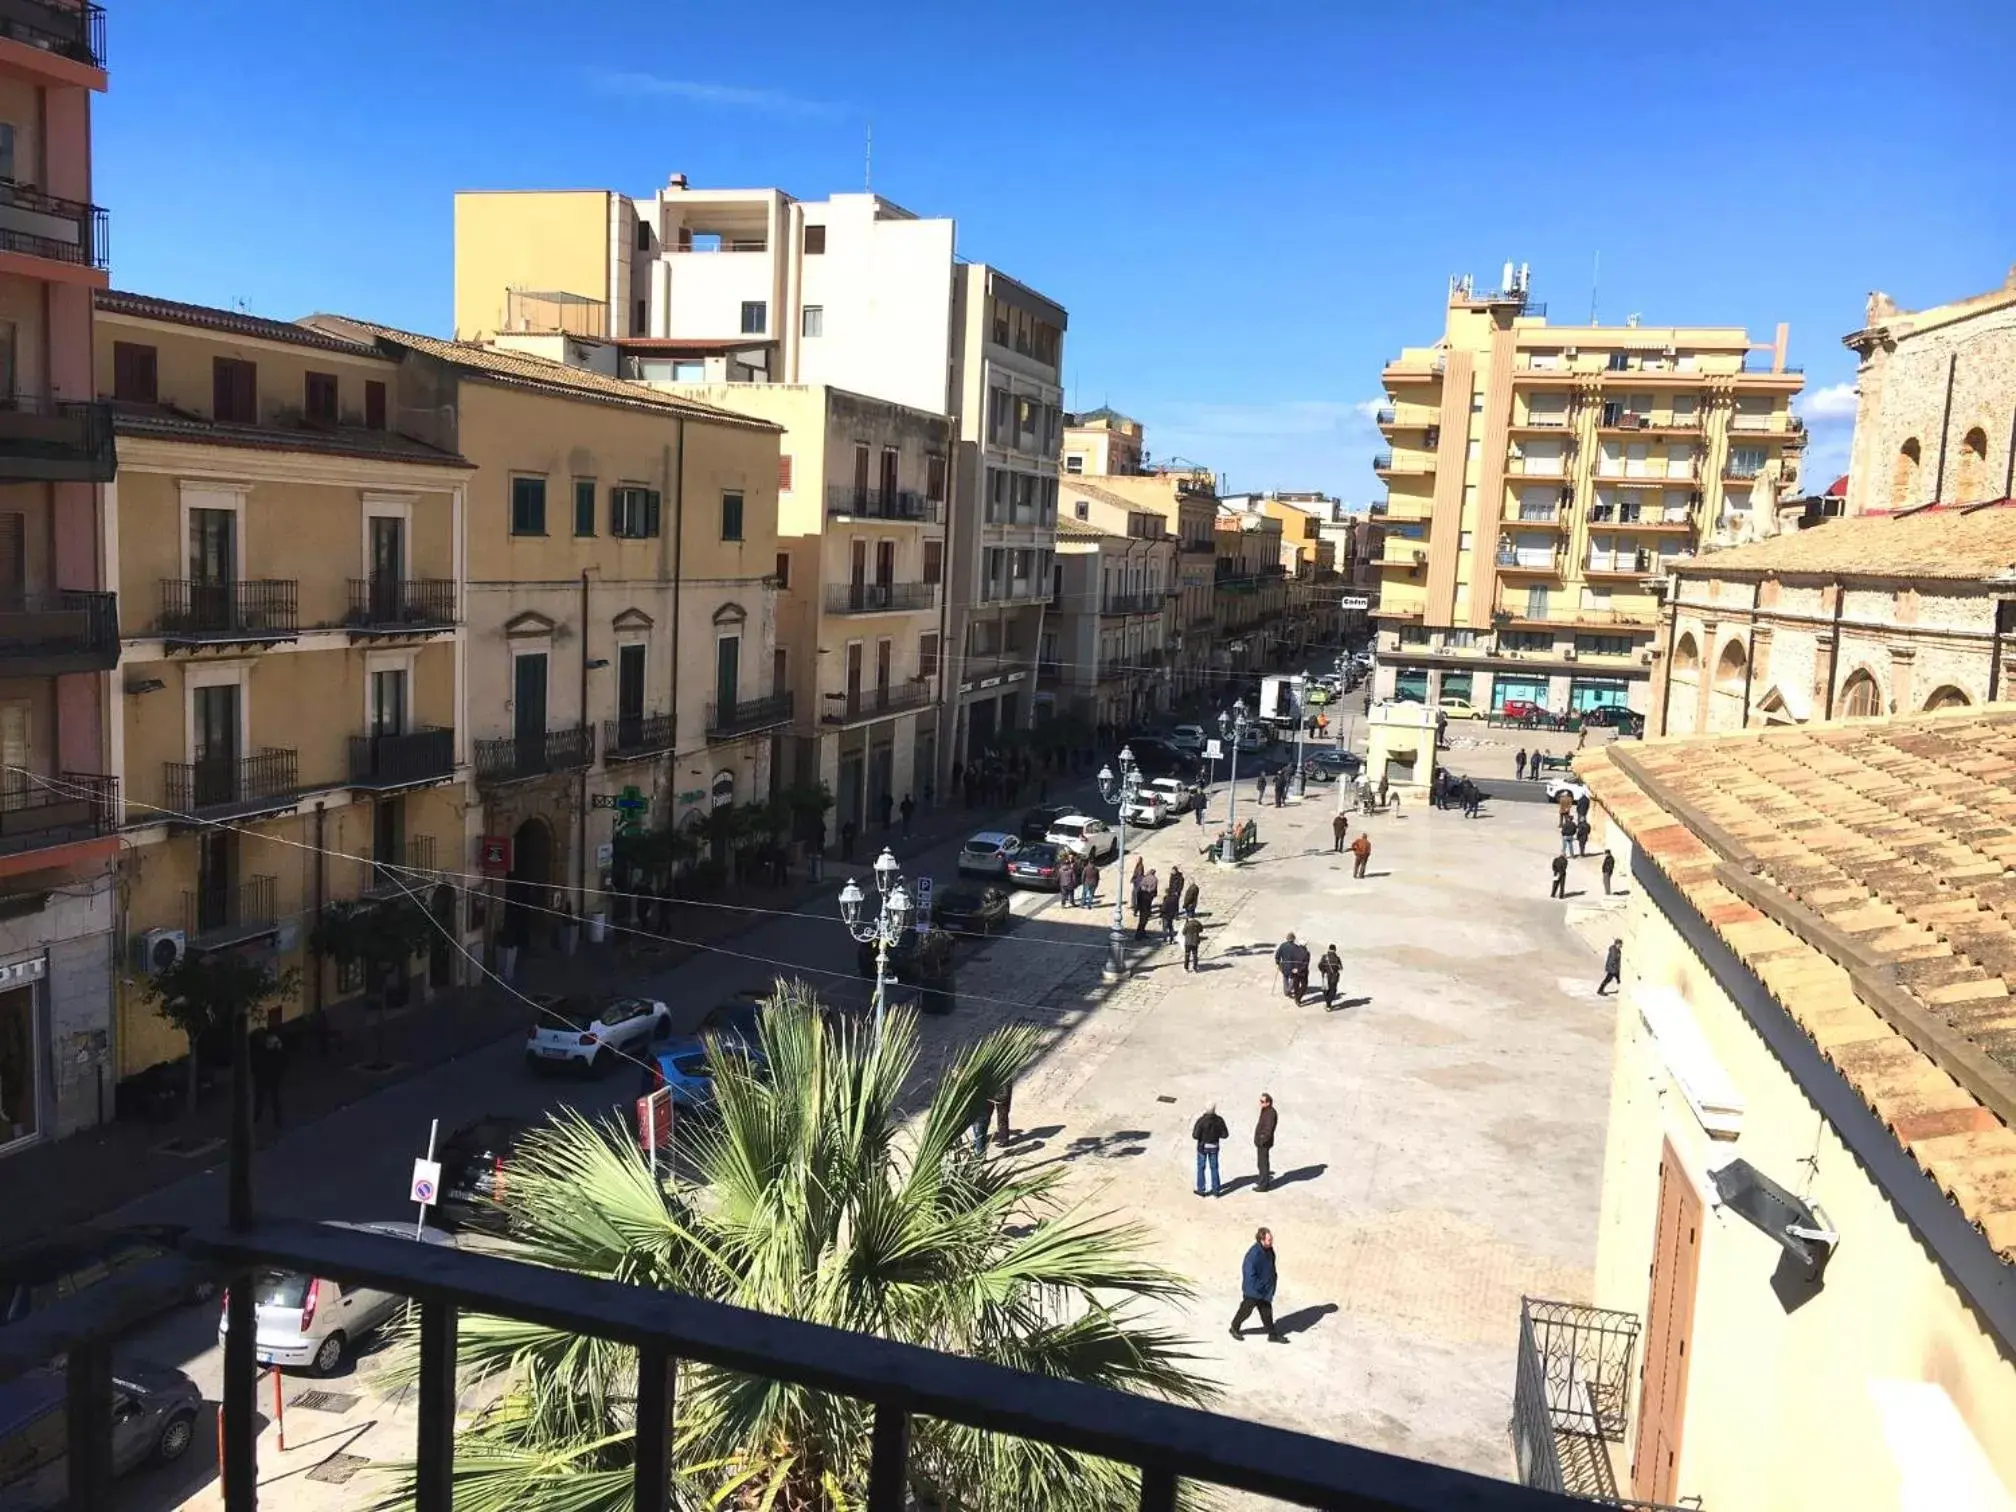 Street view in Piazza Grande